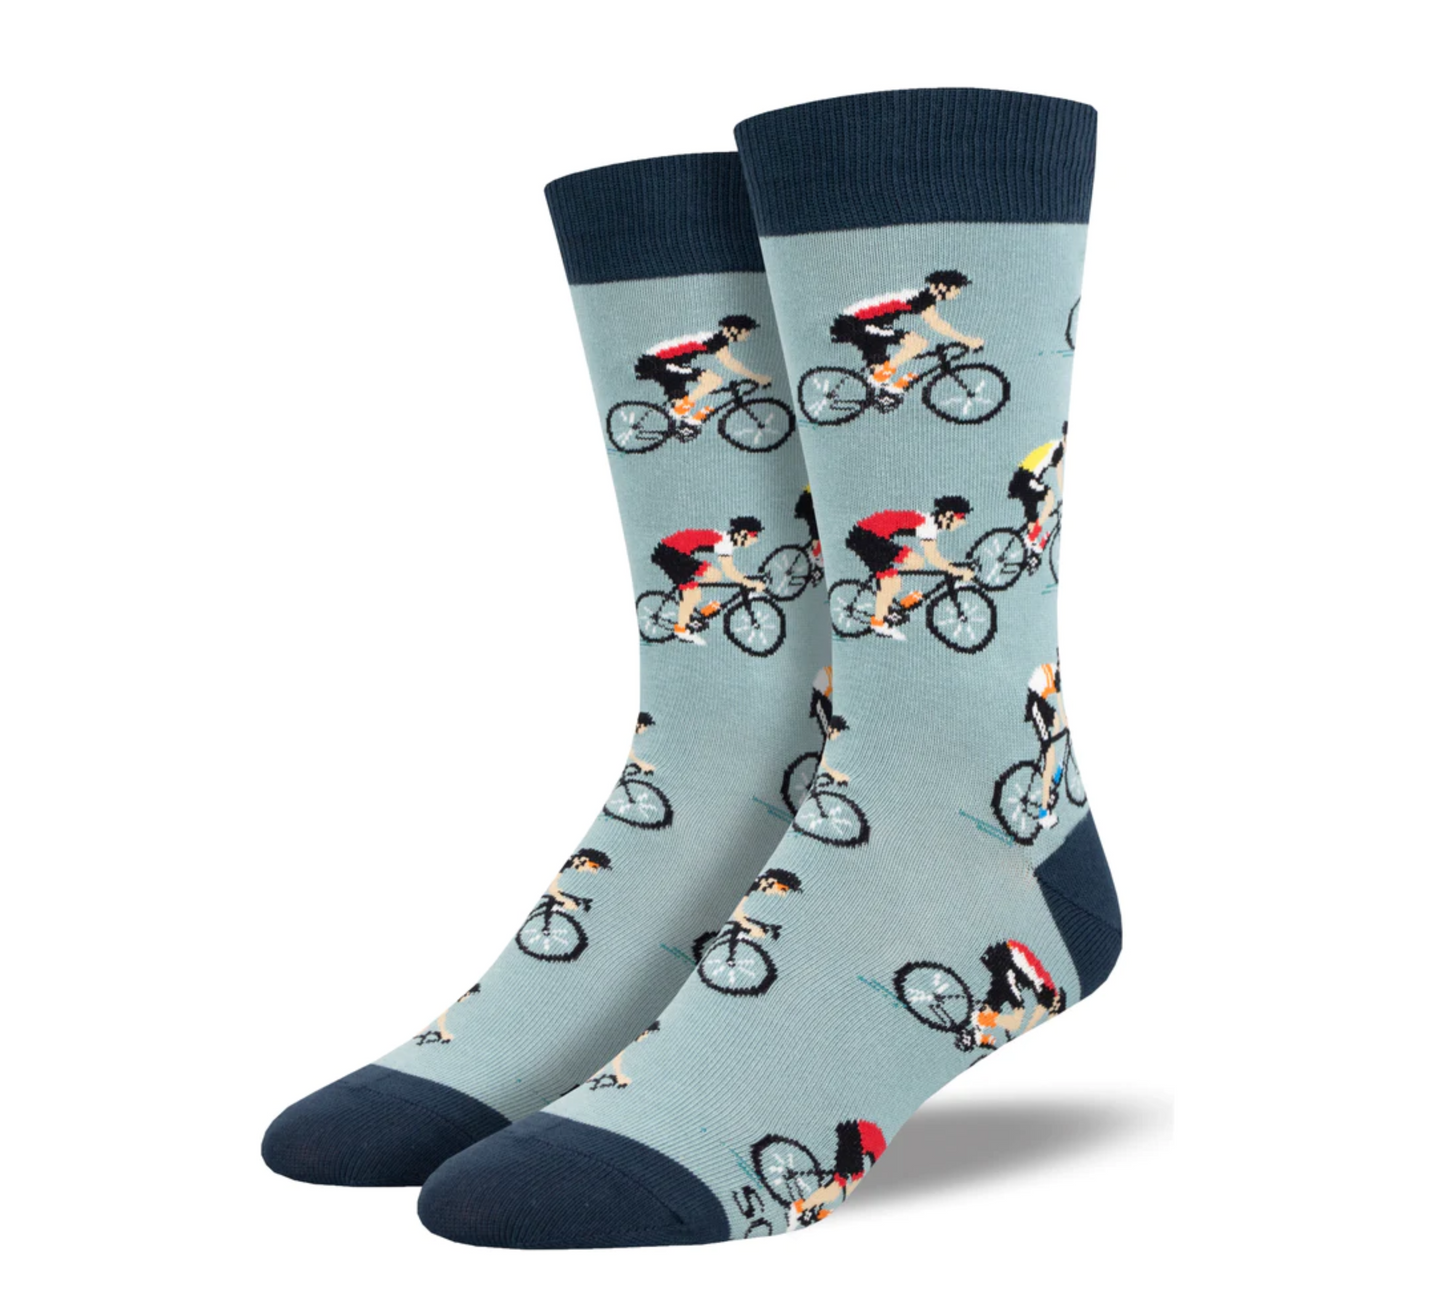 Socksmith Cycling Crew Socks - Blue - WebsiteProductphotos_e9a0477d-c789-4c08-9ca1-fffa27879171